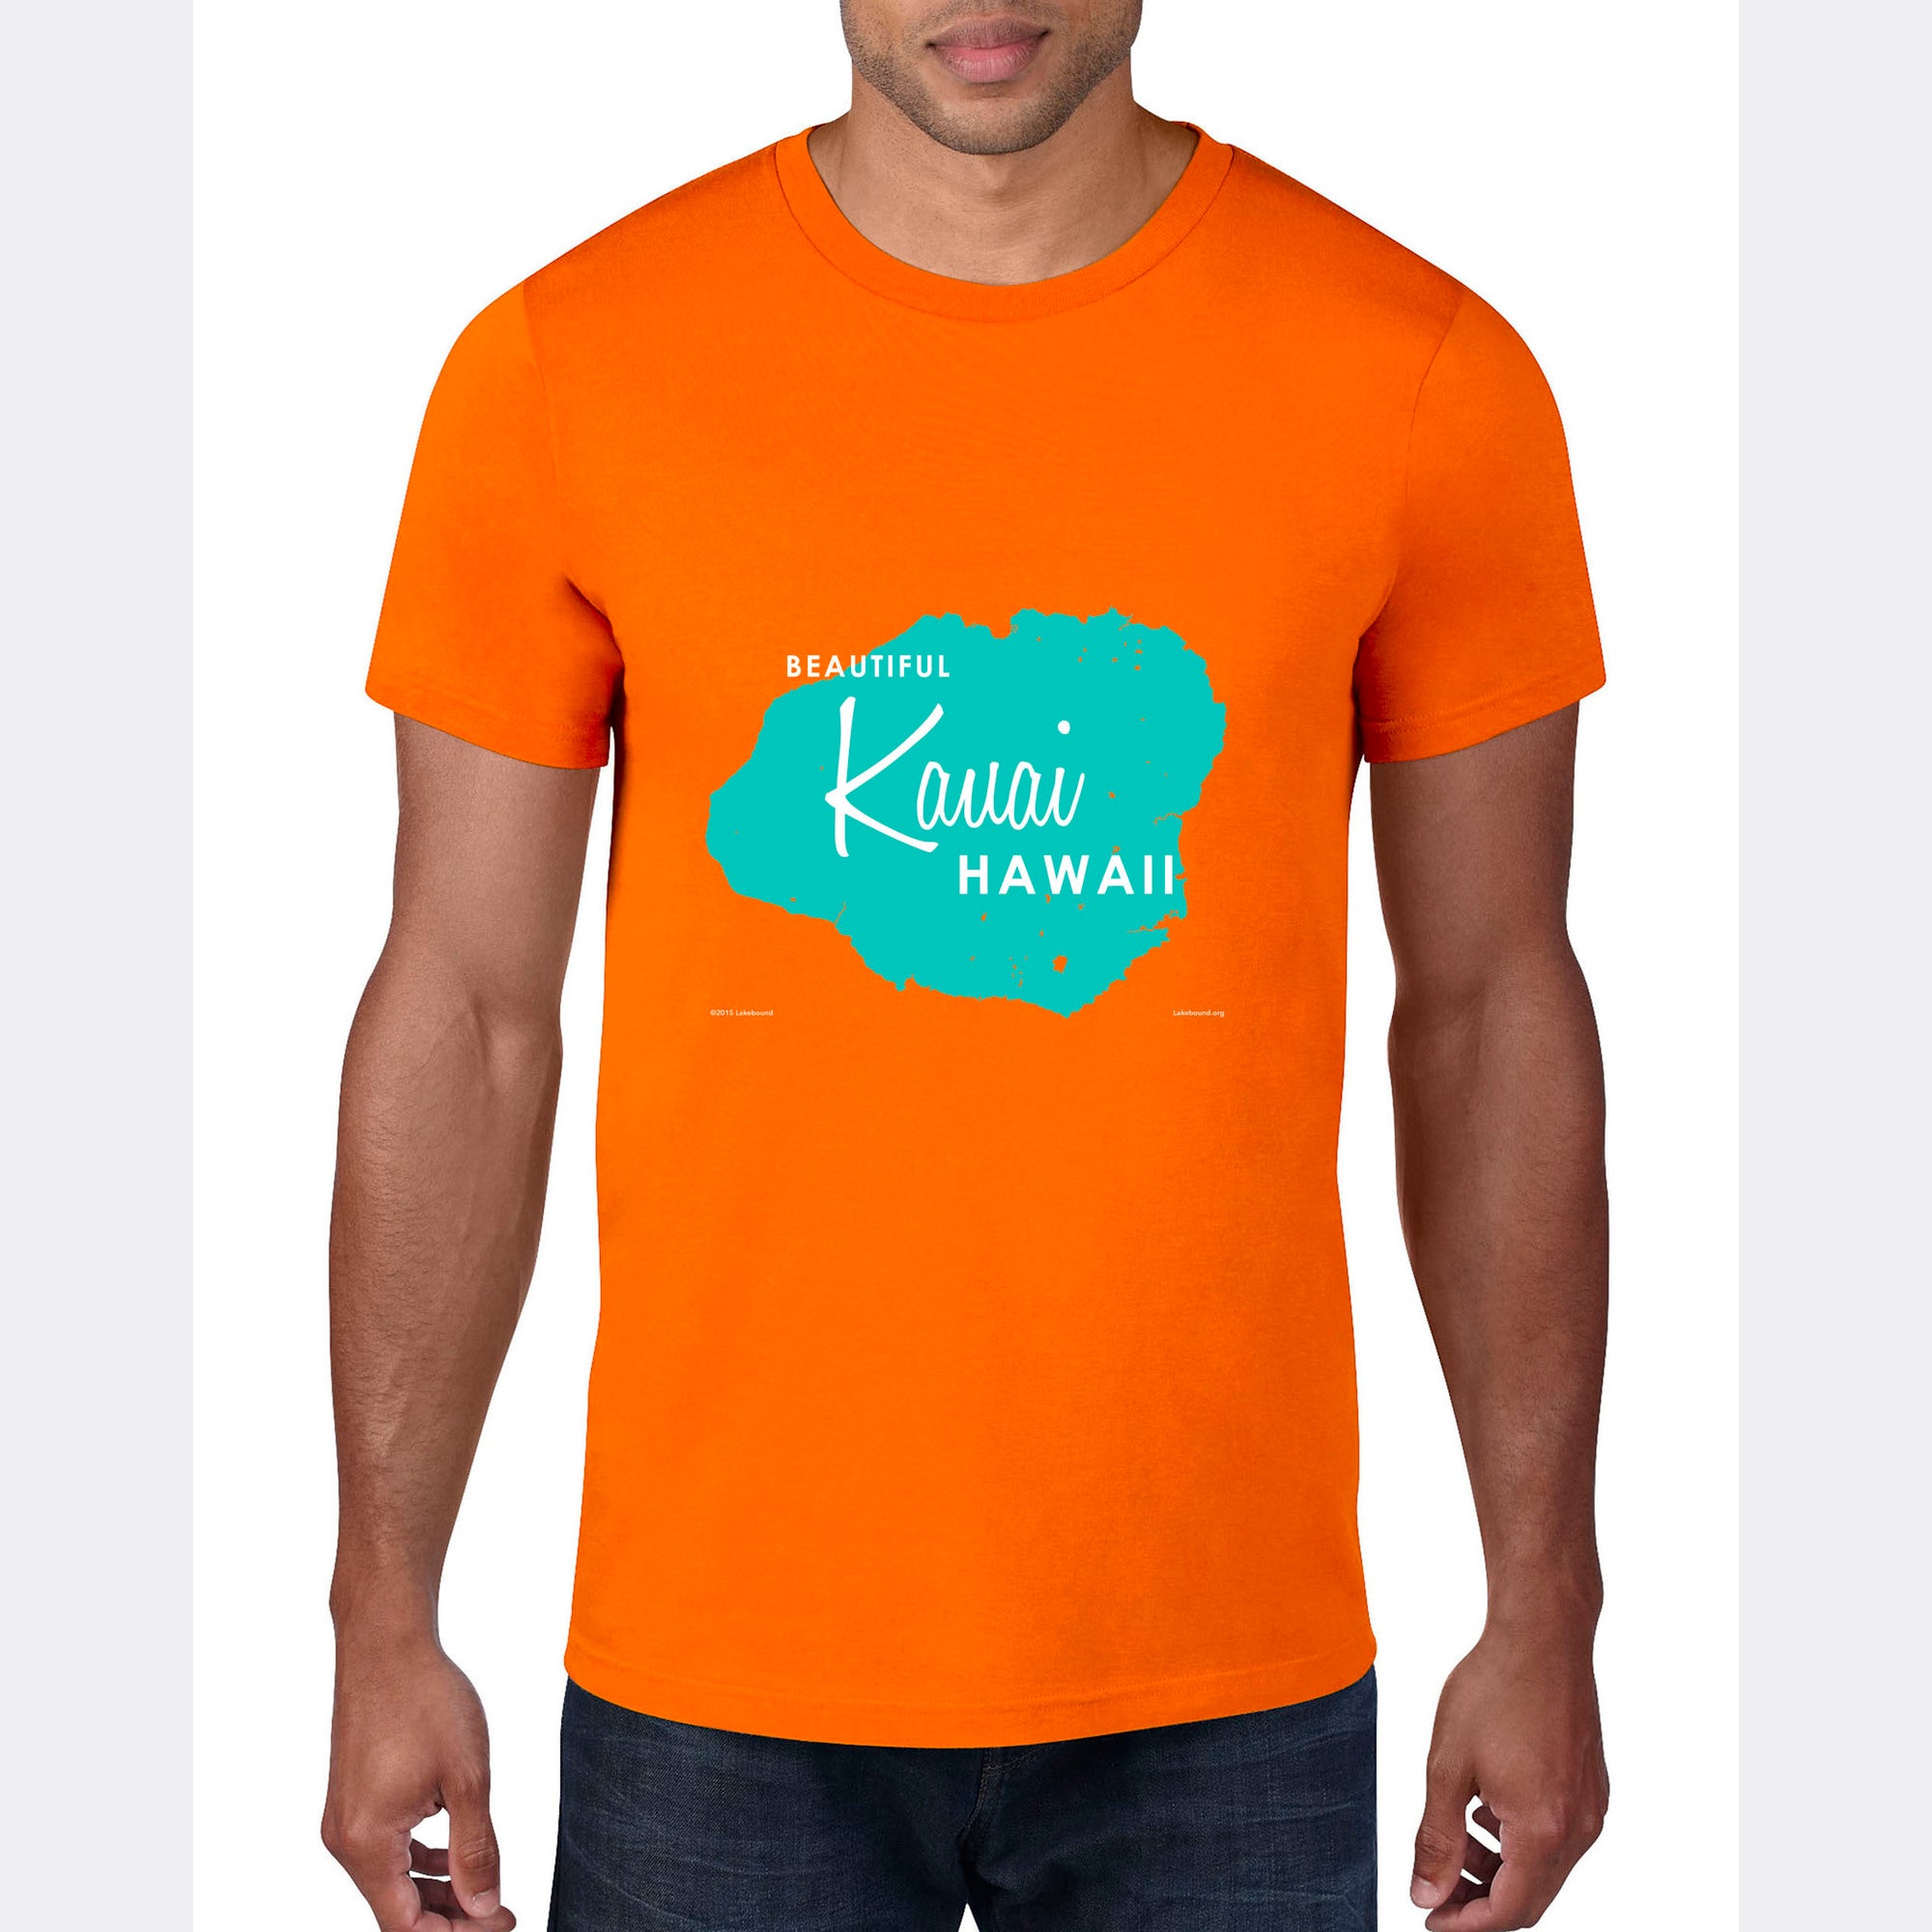 Kauai Hawaii, T-Shirt